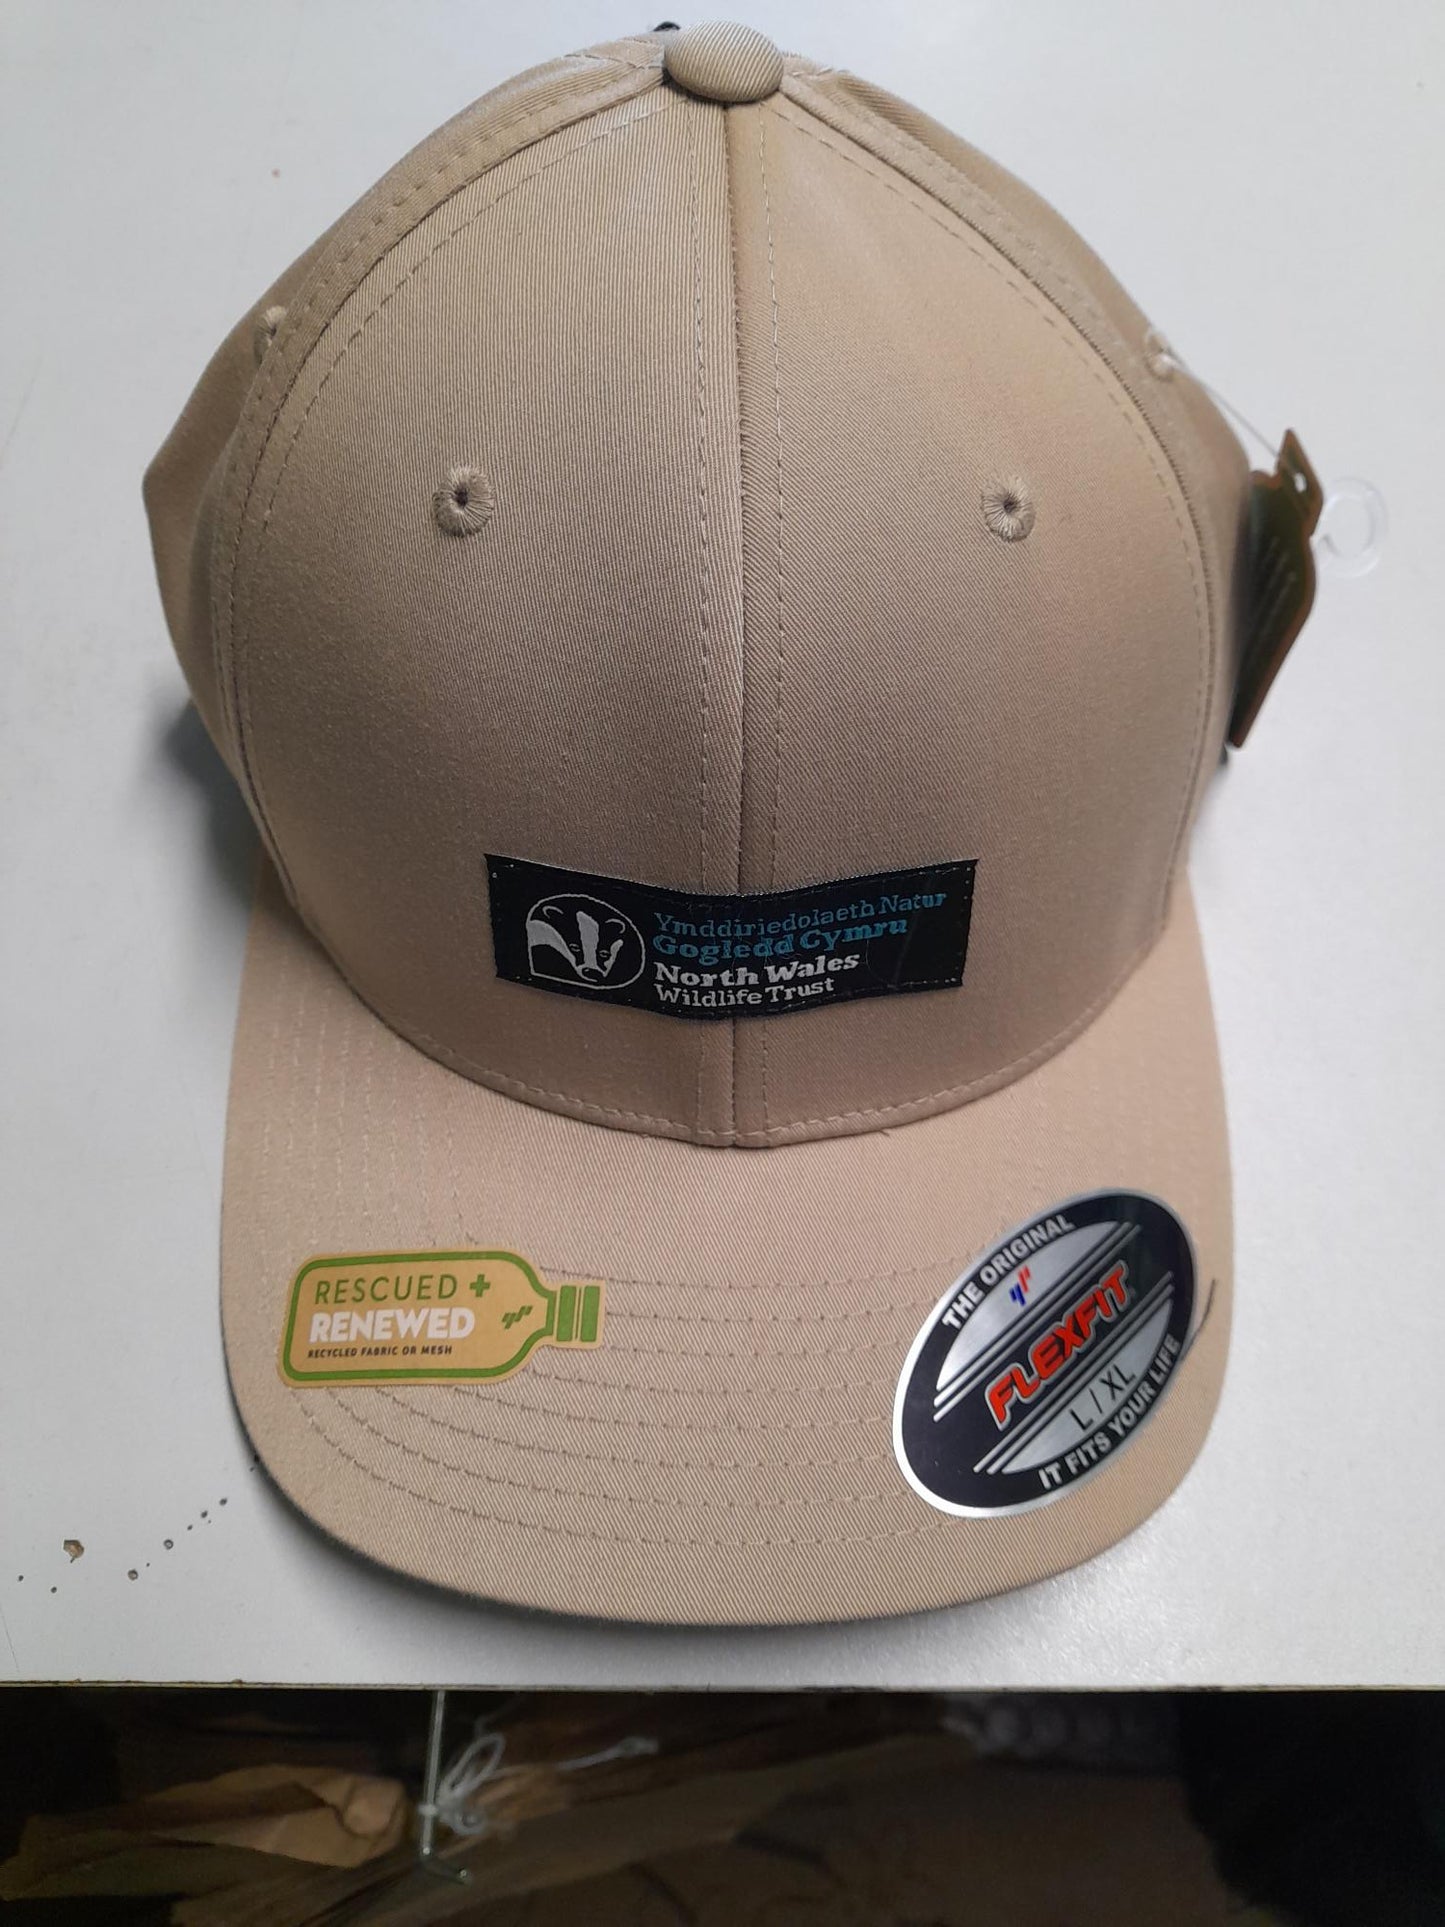 NWWT "Flexfit" recycled polyester baseball cap